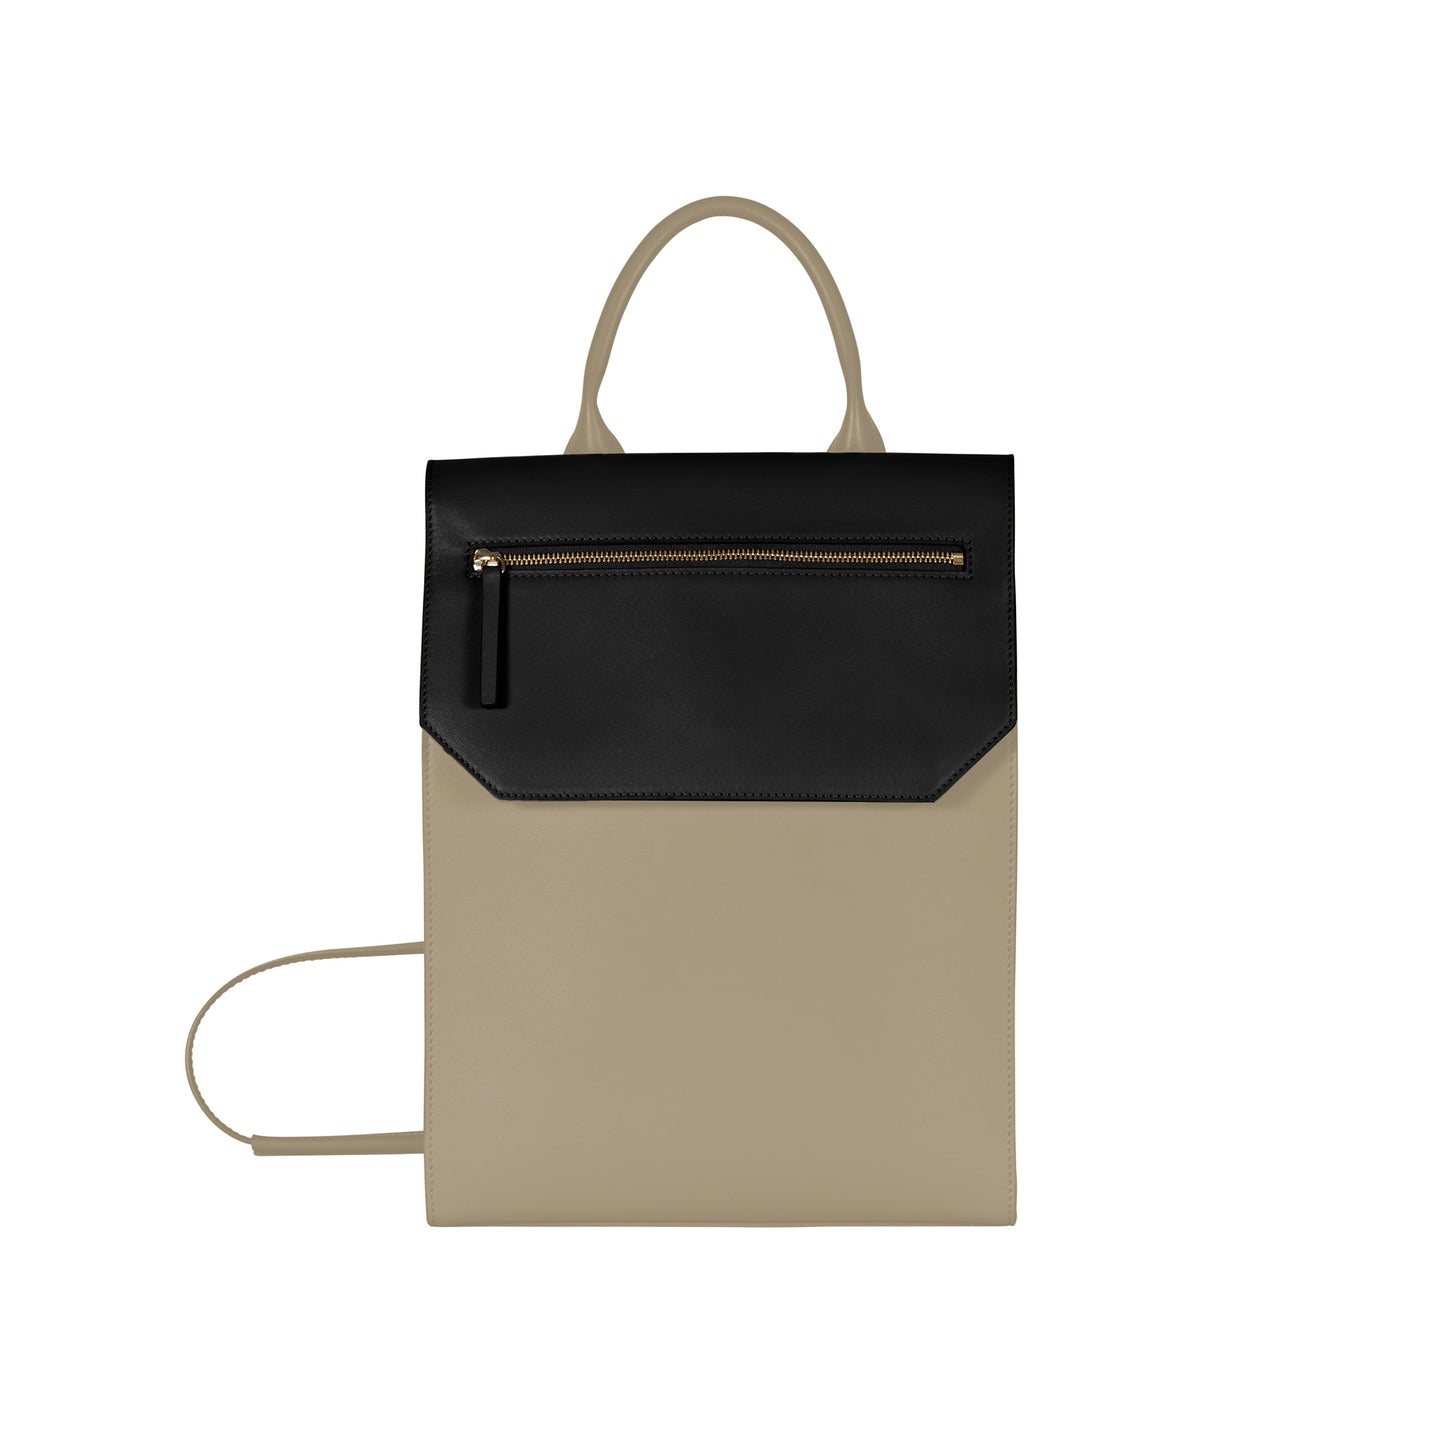 Lo Zaino Designer Luxury Backpack Black and Taupe Made in Italy Crossbody Top Handle Satchel. Sustaianle Luxury. Minimalist Style Bag